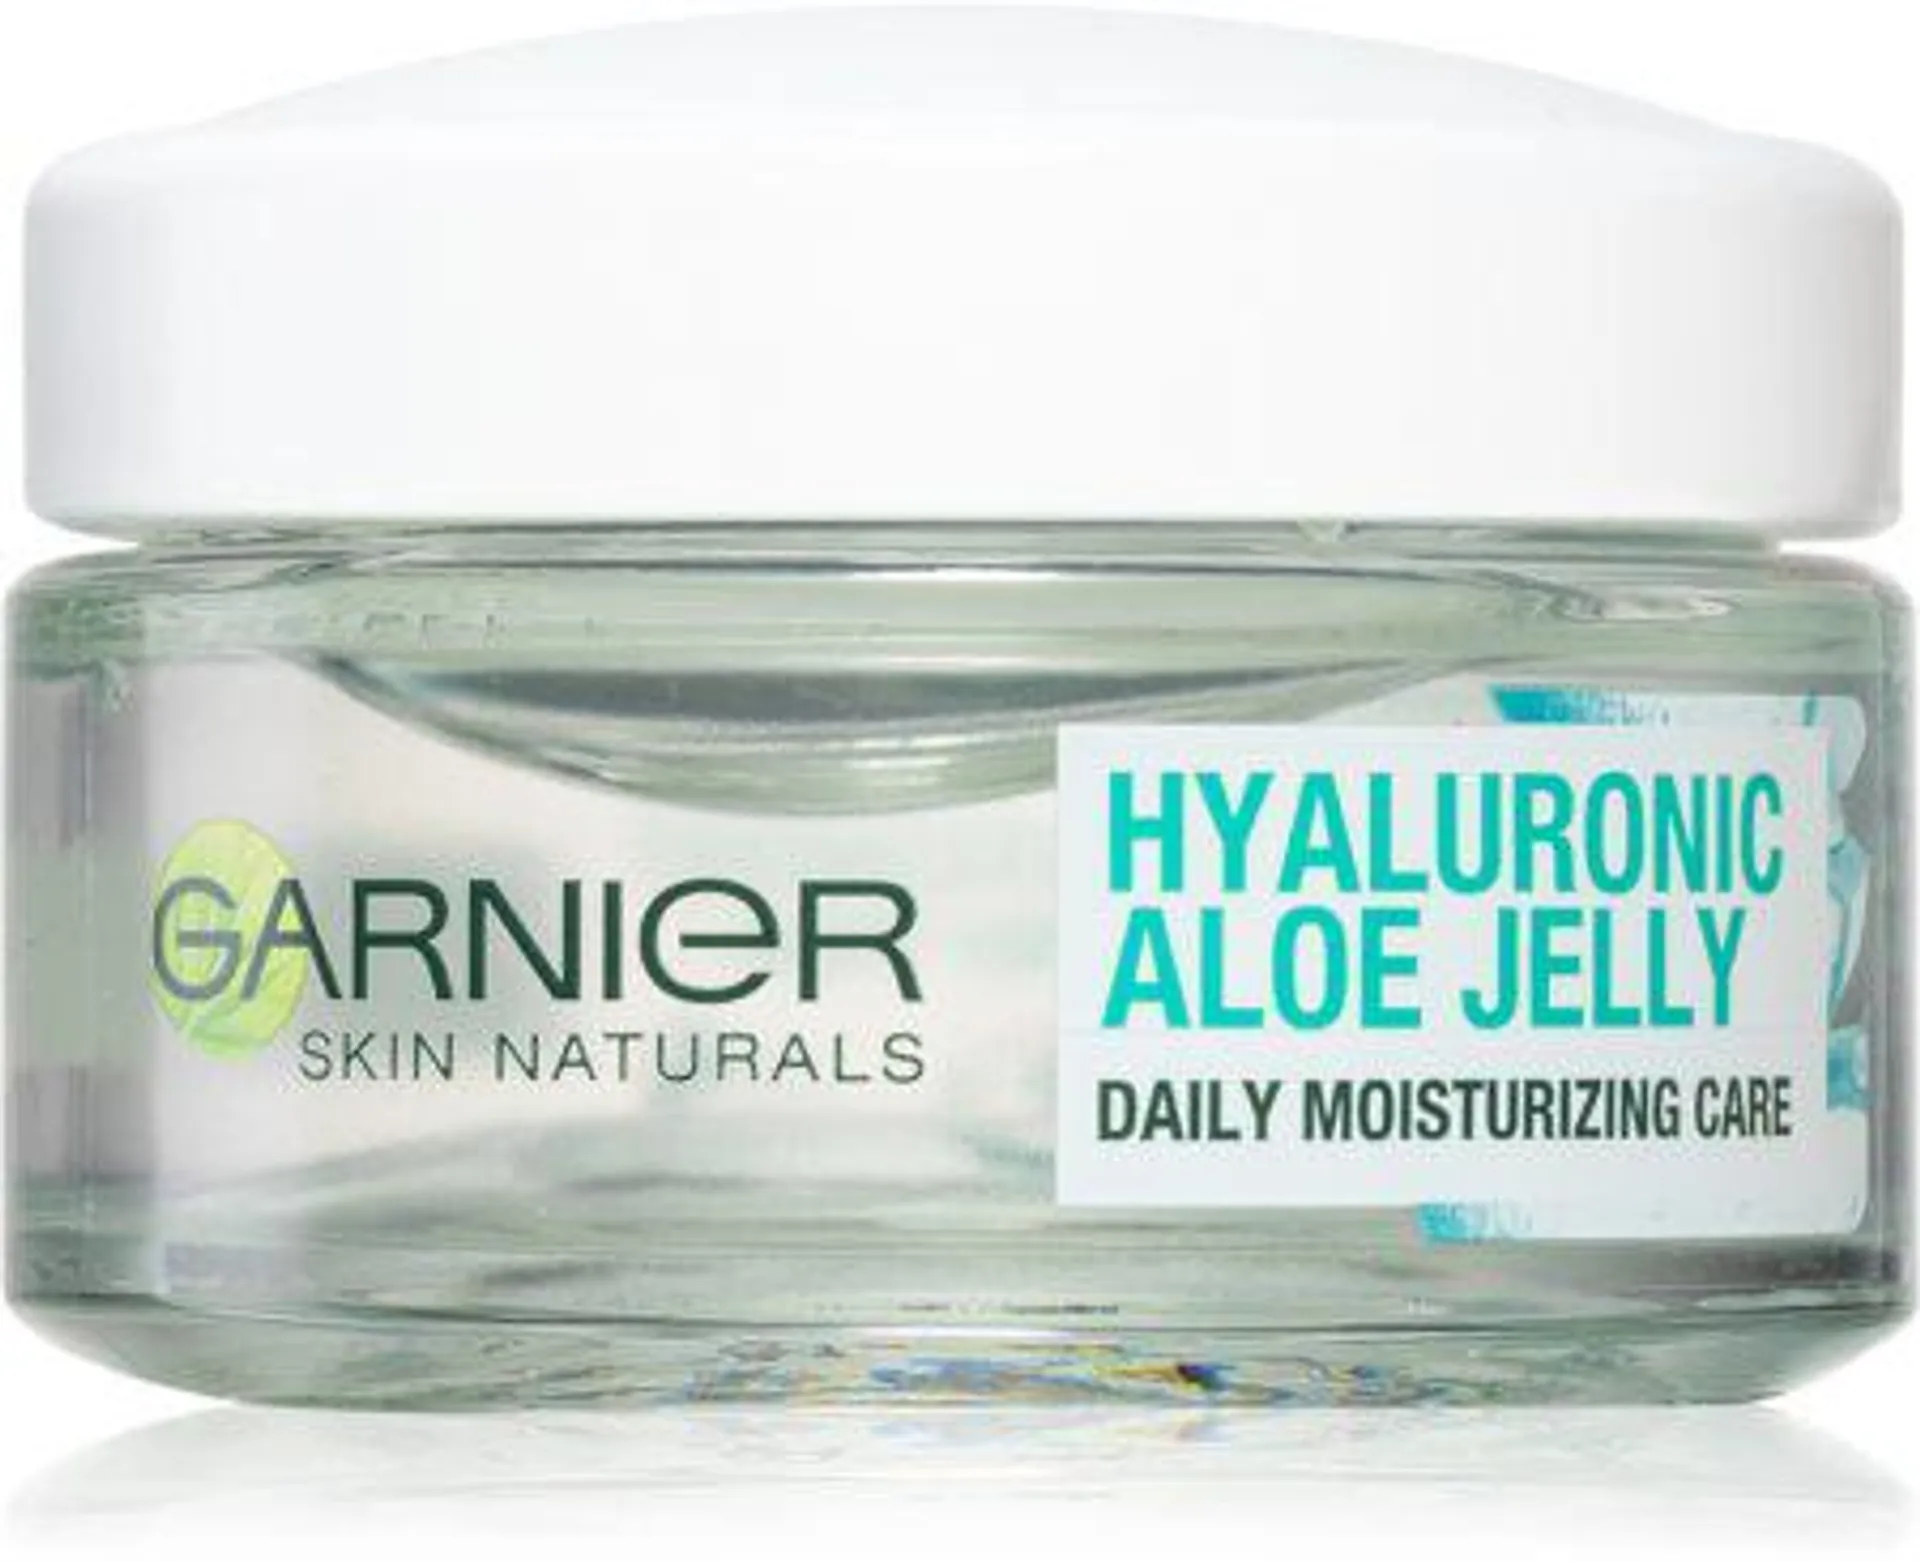 Skin Naturals Hyaluronic Aloe Jelly